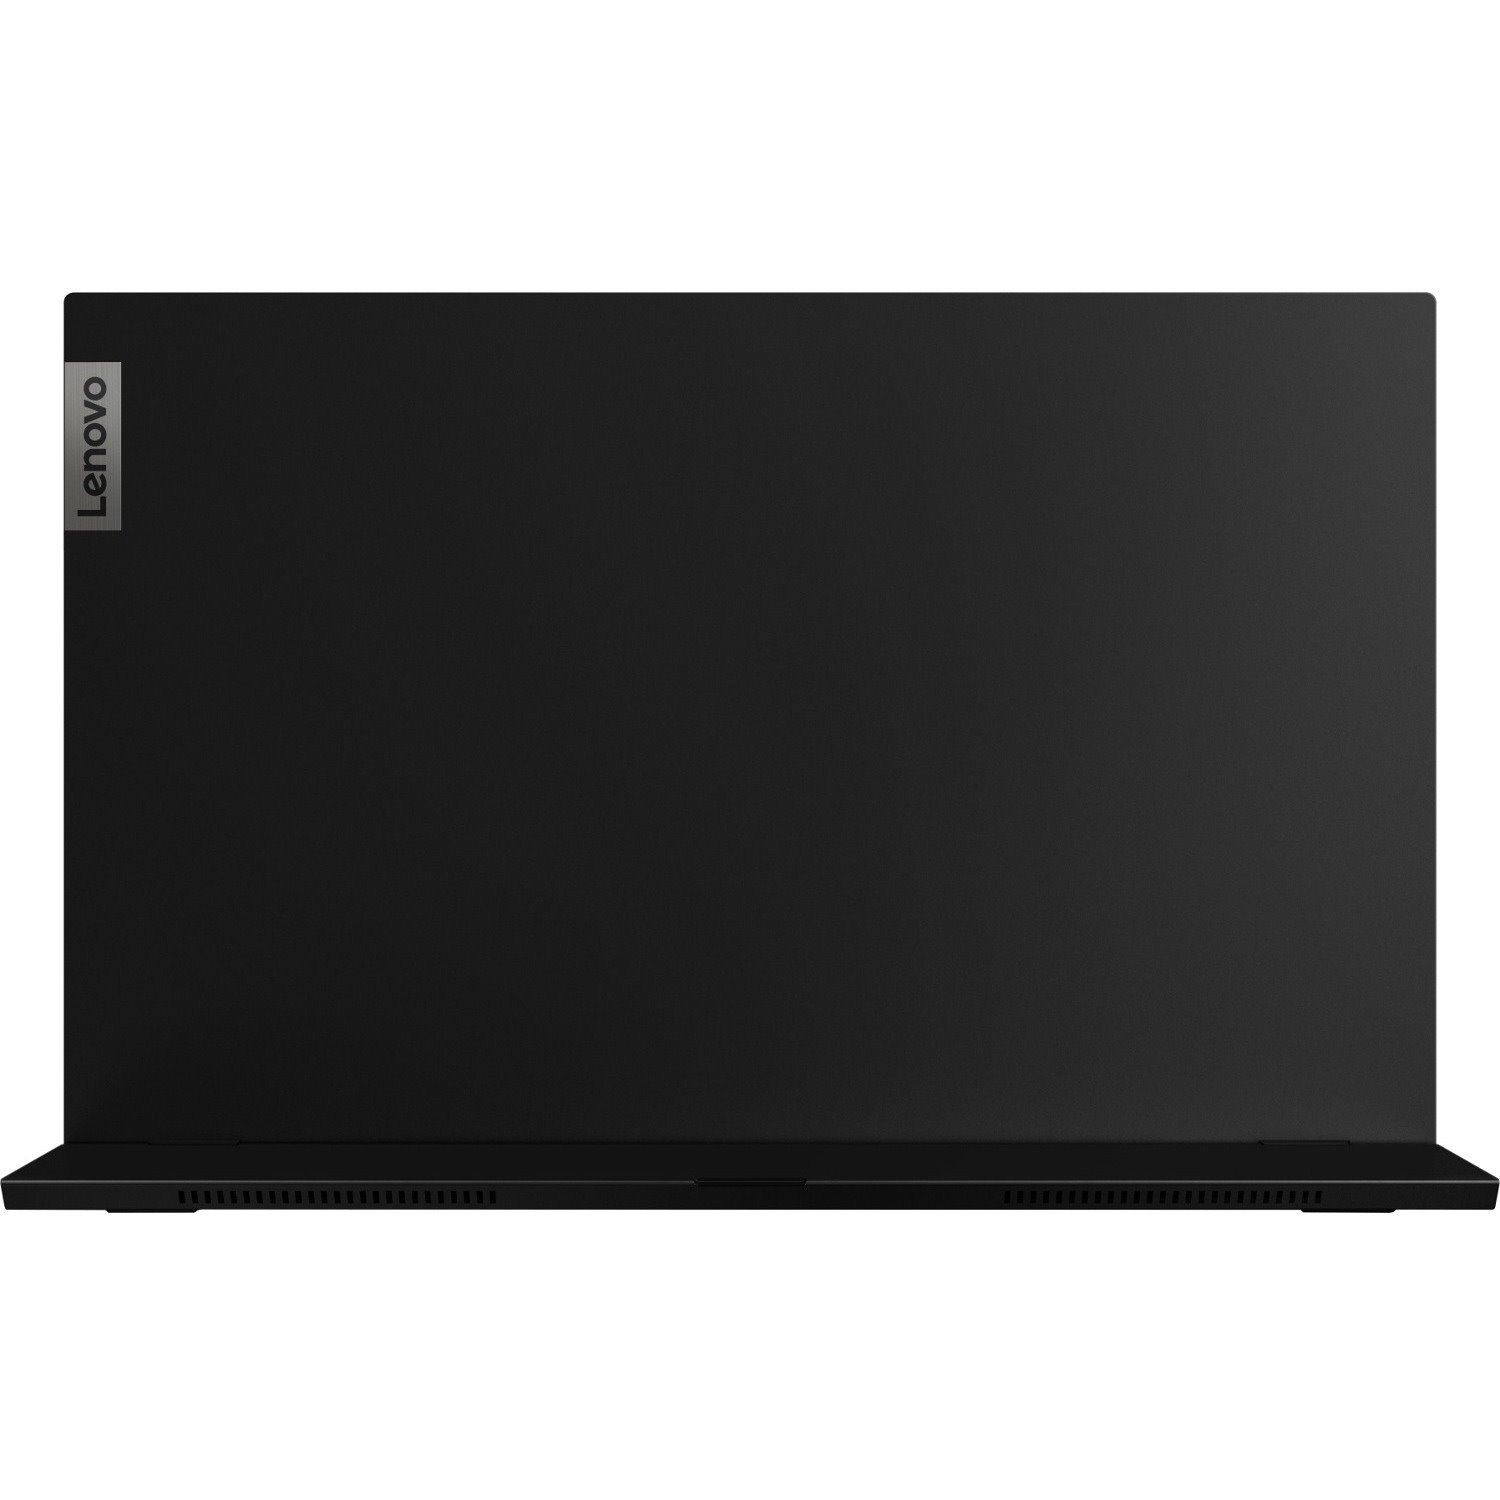 Lenovo ThinkVision M14 14" Full HD WLED LCD Monitor - 16:9 - Raven Black